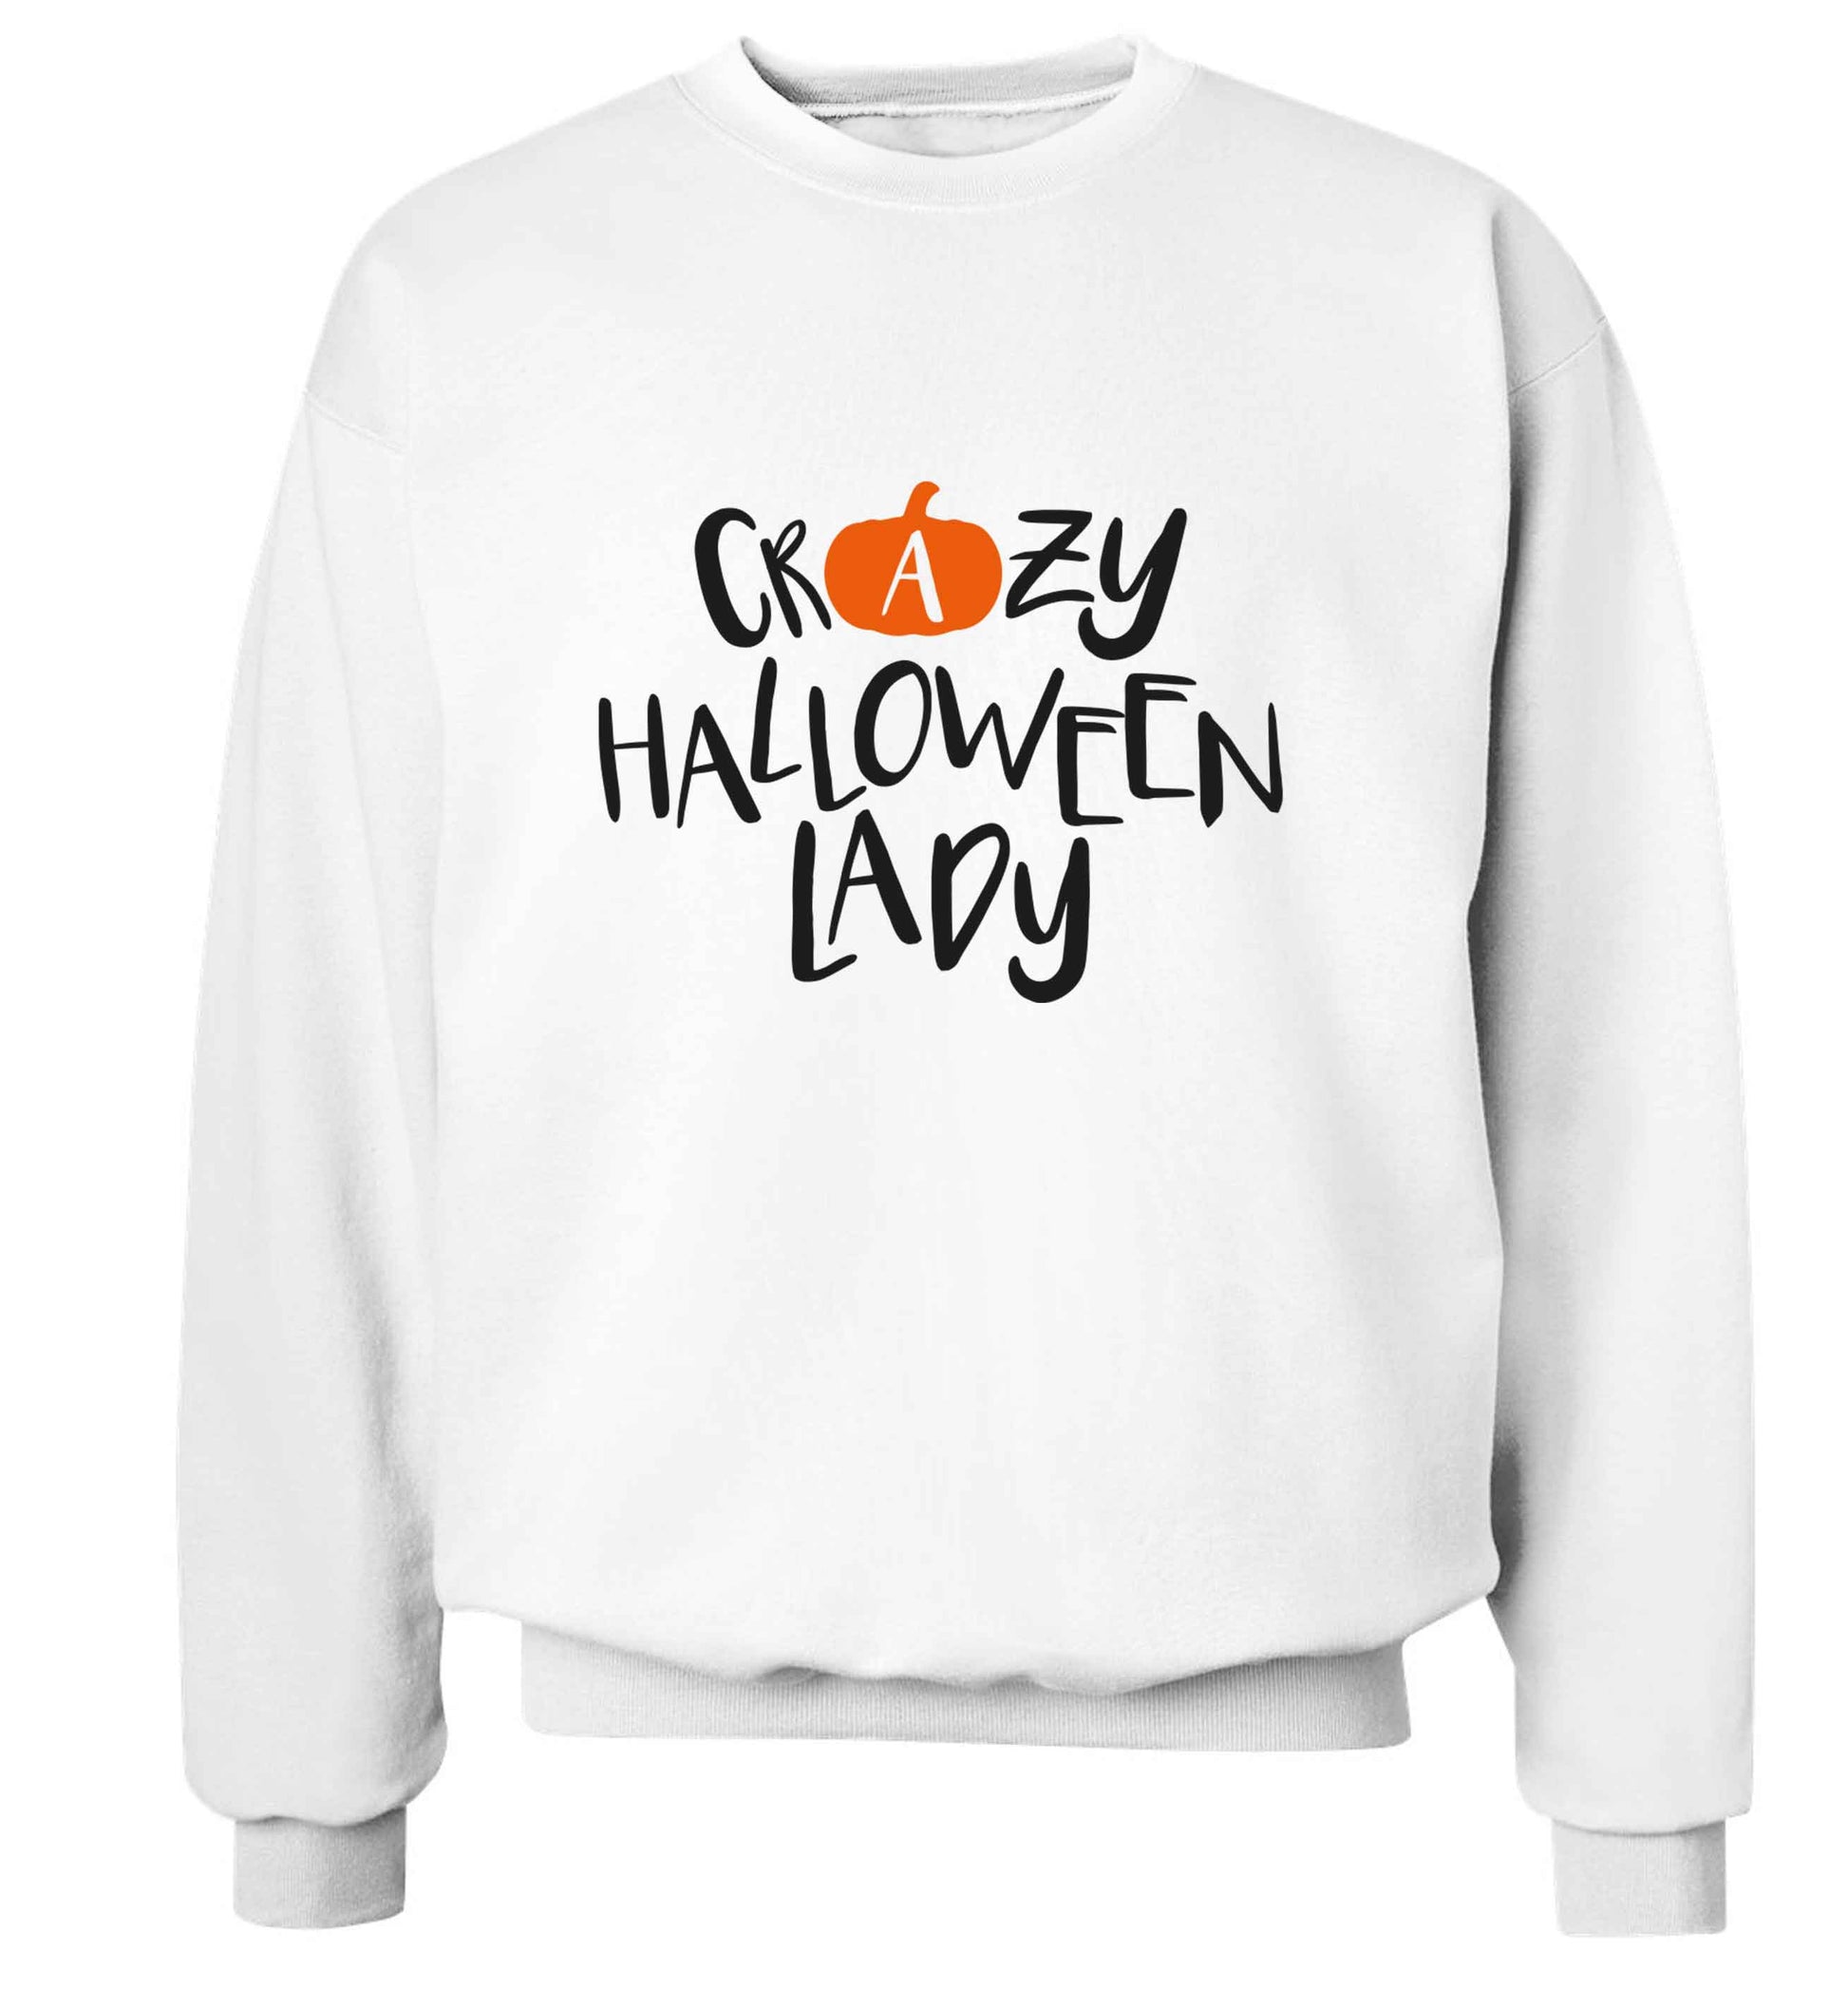 Crazy halloween lady adult's unisex white sweater 2XL